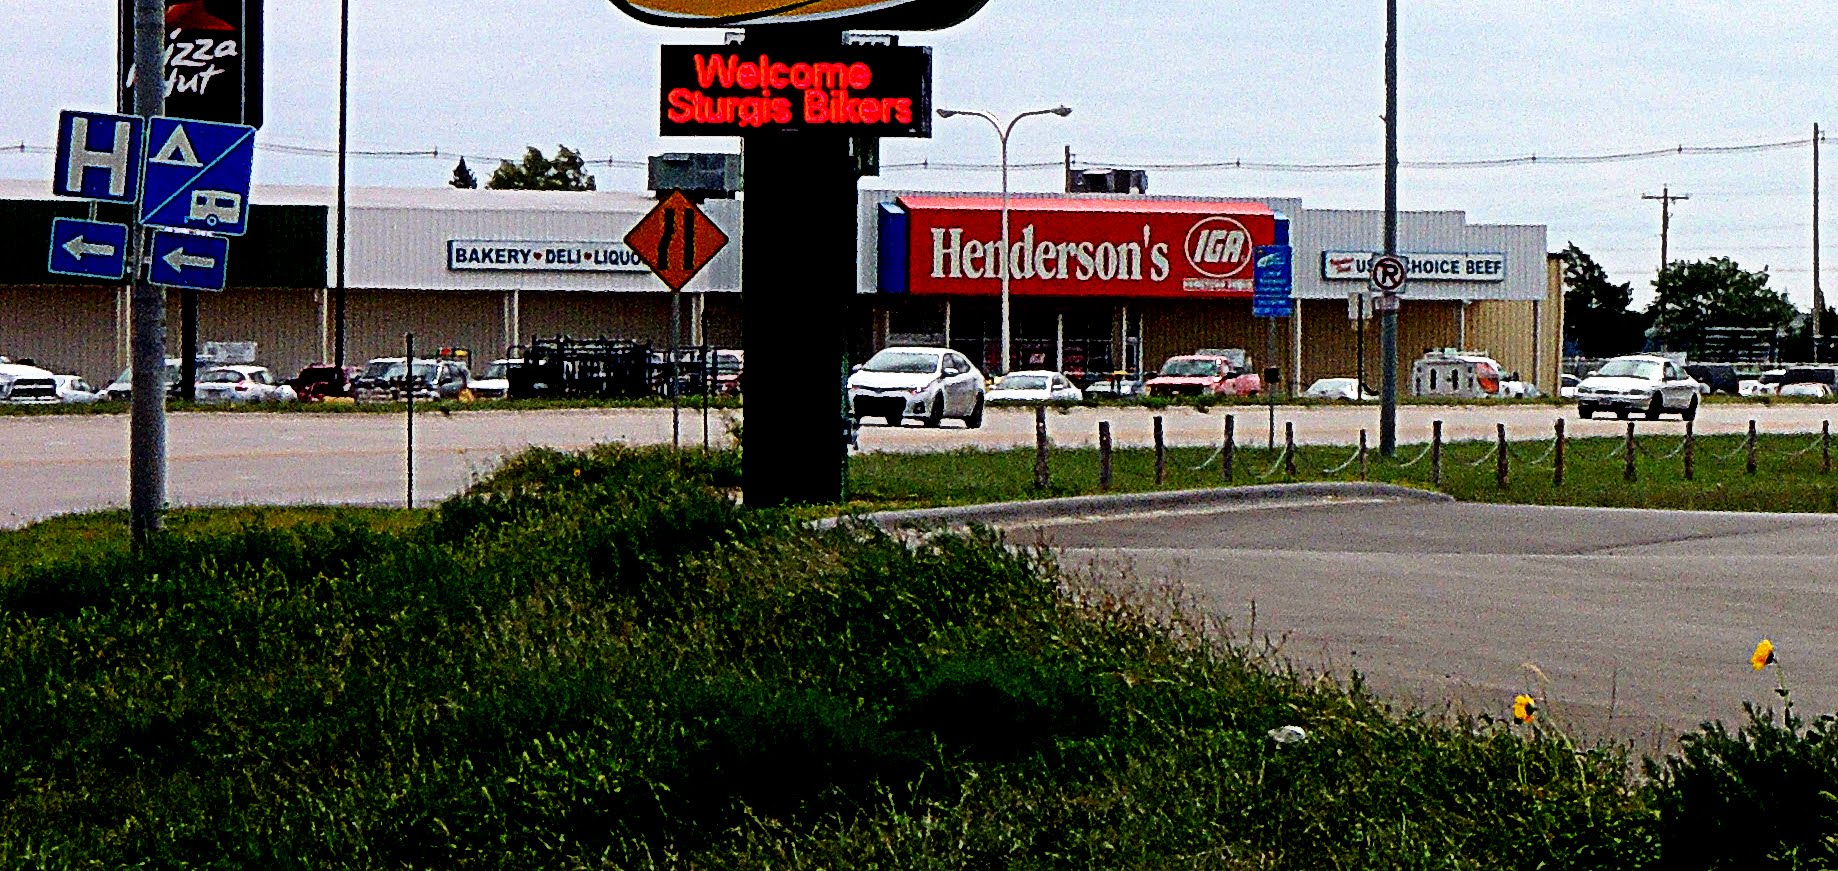 Henderson's IGA Store